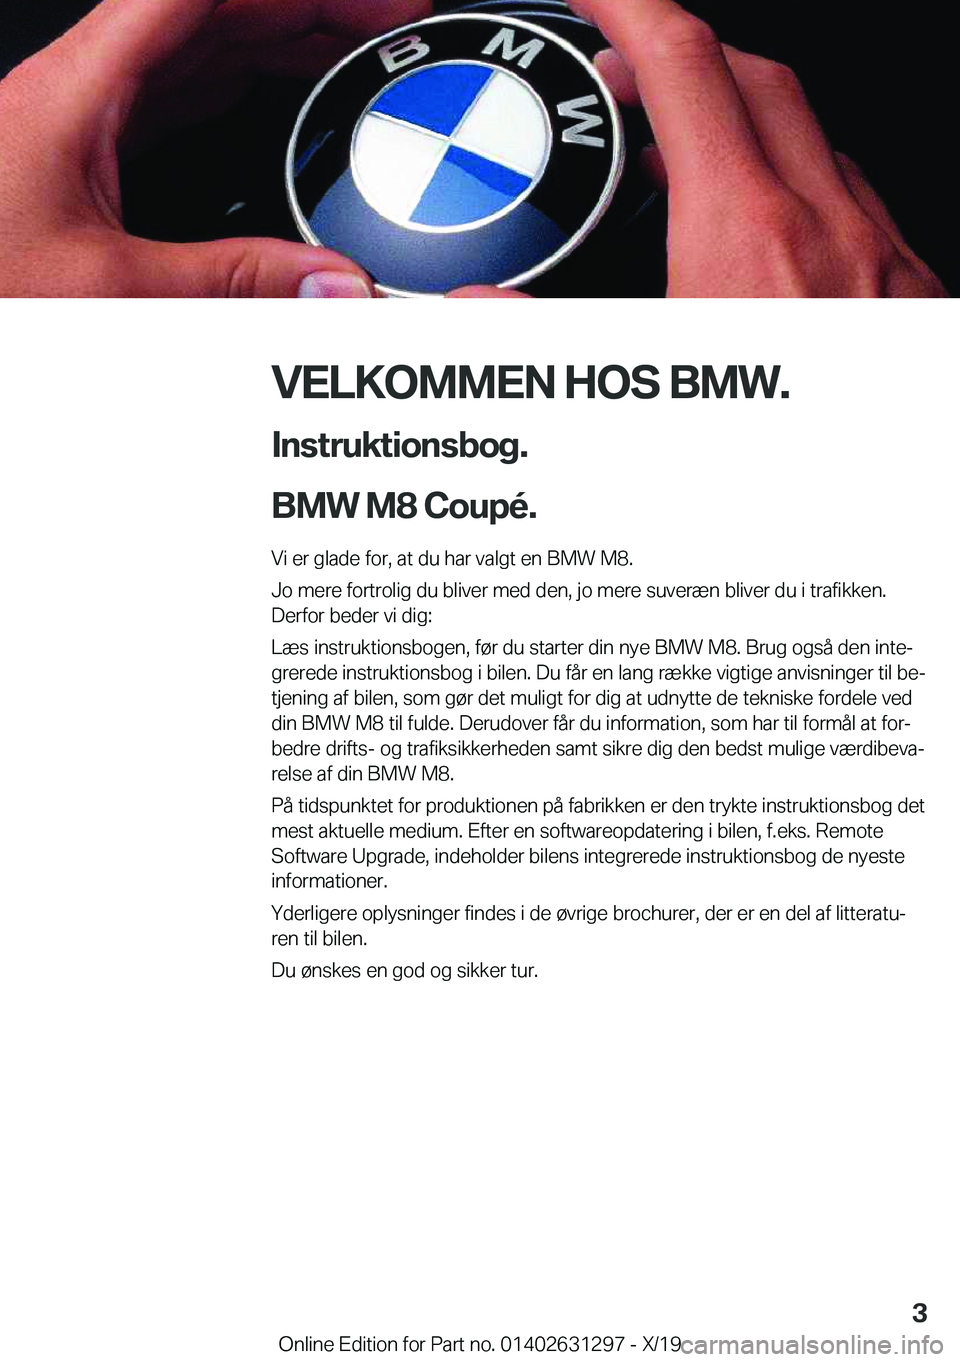 BMW M8 2020  InstruktionsbØger (in Danish) �V�E�L�K�O�M�M�E�N��H�O�S��B�M�W�.
�I�n�s�t�r�u�k�t�i�o�n�s�b�o�g�.
�B�M�W��M�8��C�o�u�p�